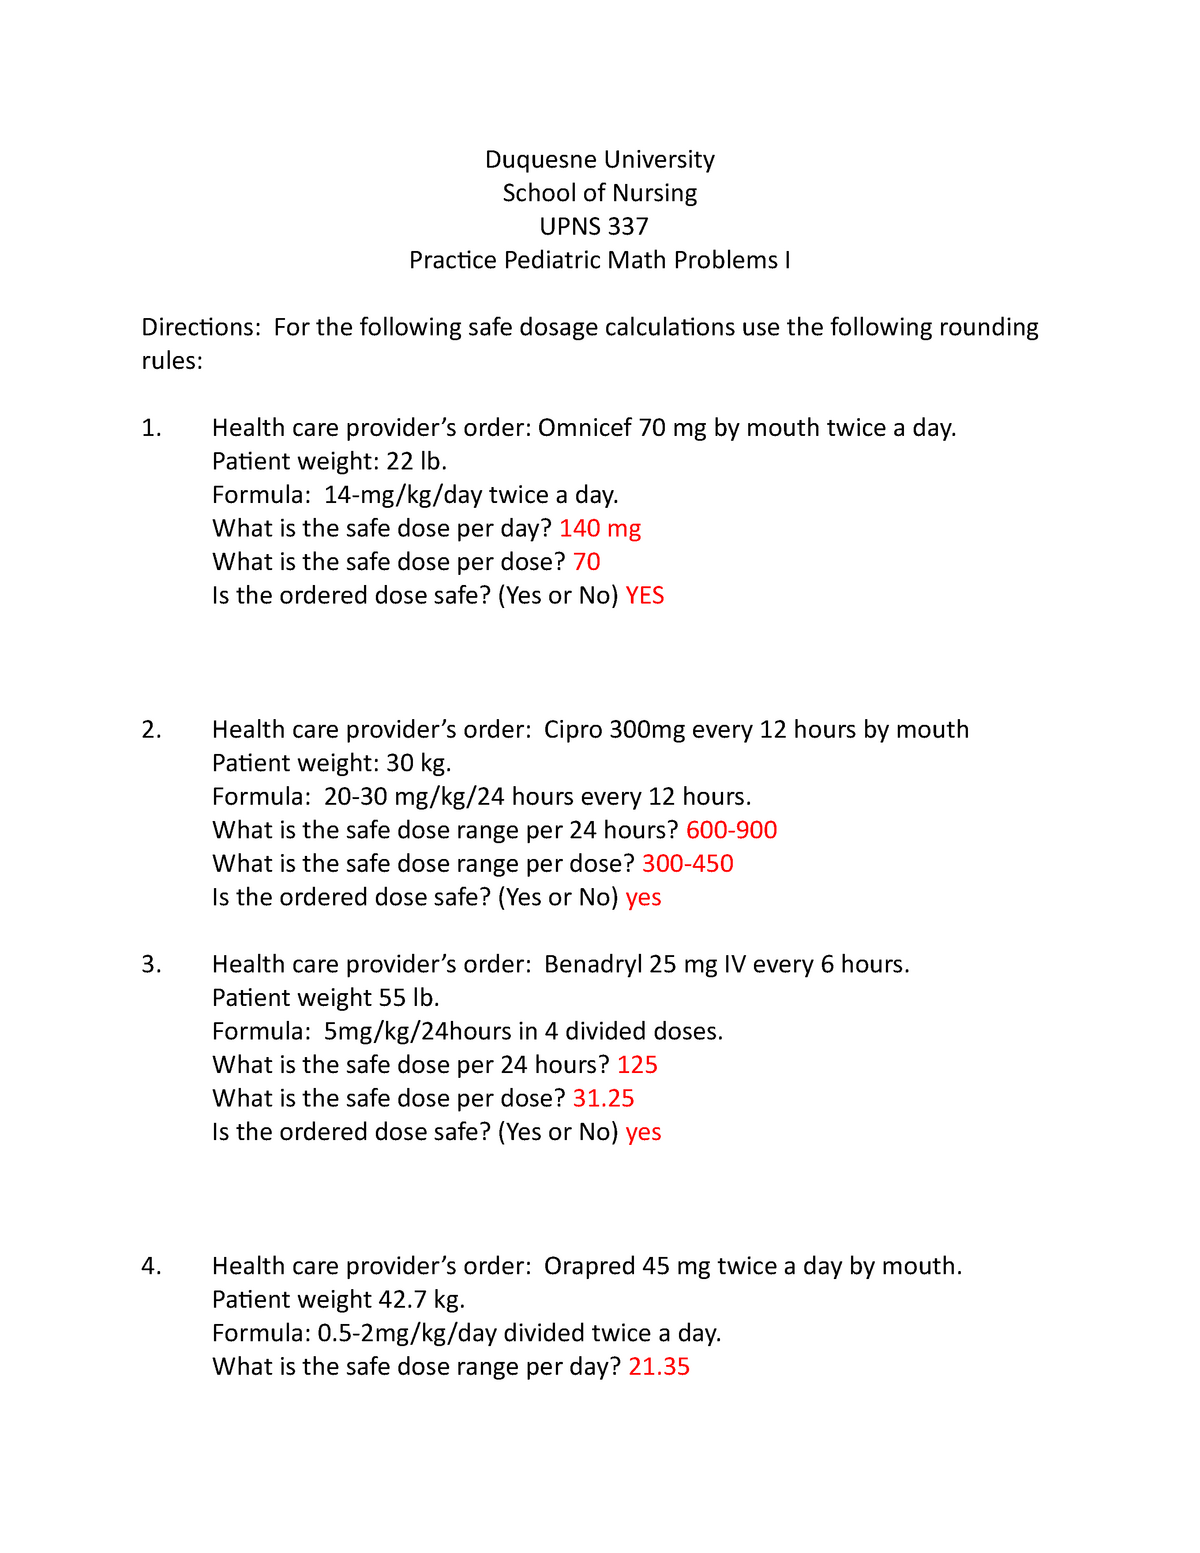 Pediatric Math Practice Problems I(1)-1 Key-3 - Duquesne University School Of Nursing Upns 337 - Studocu